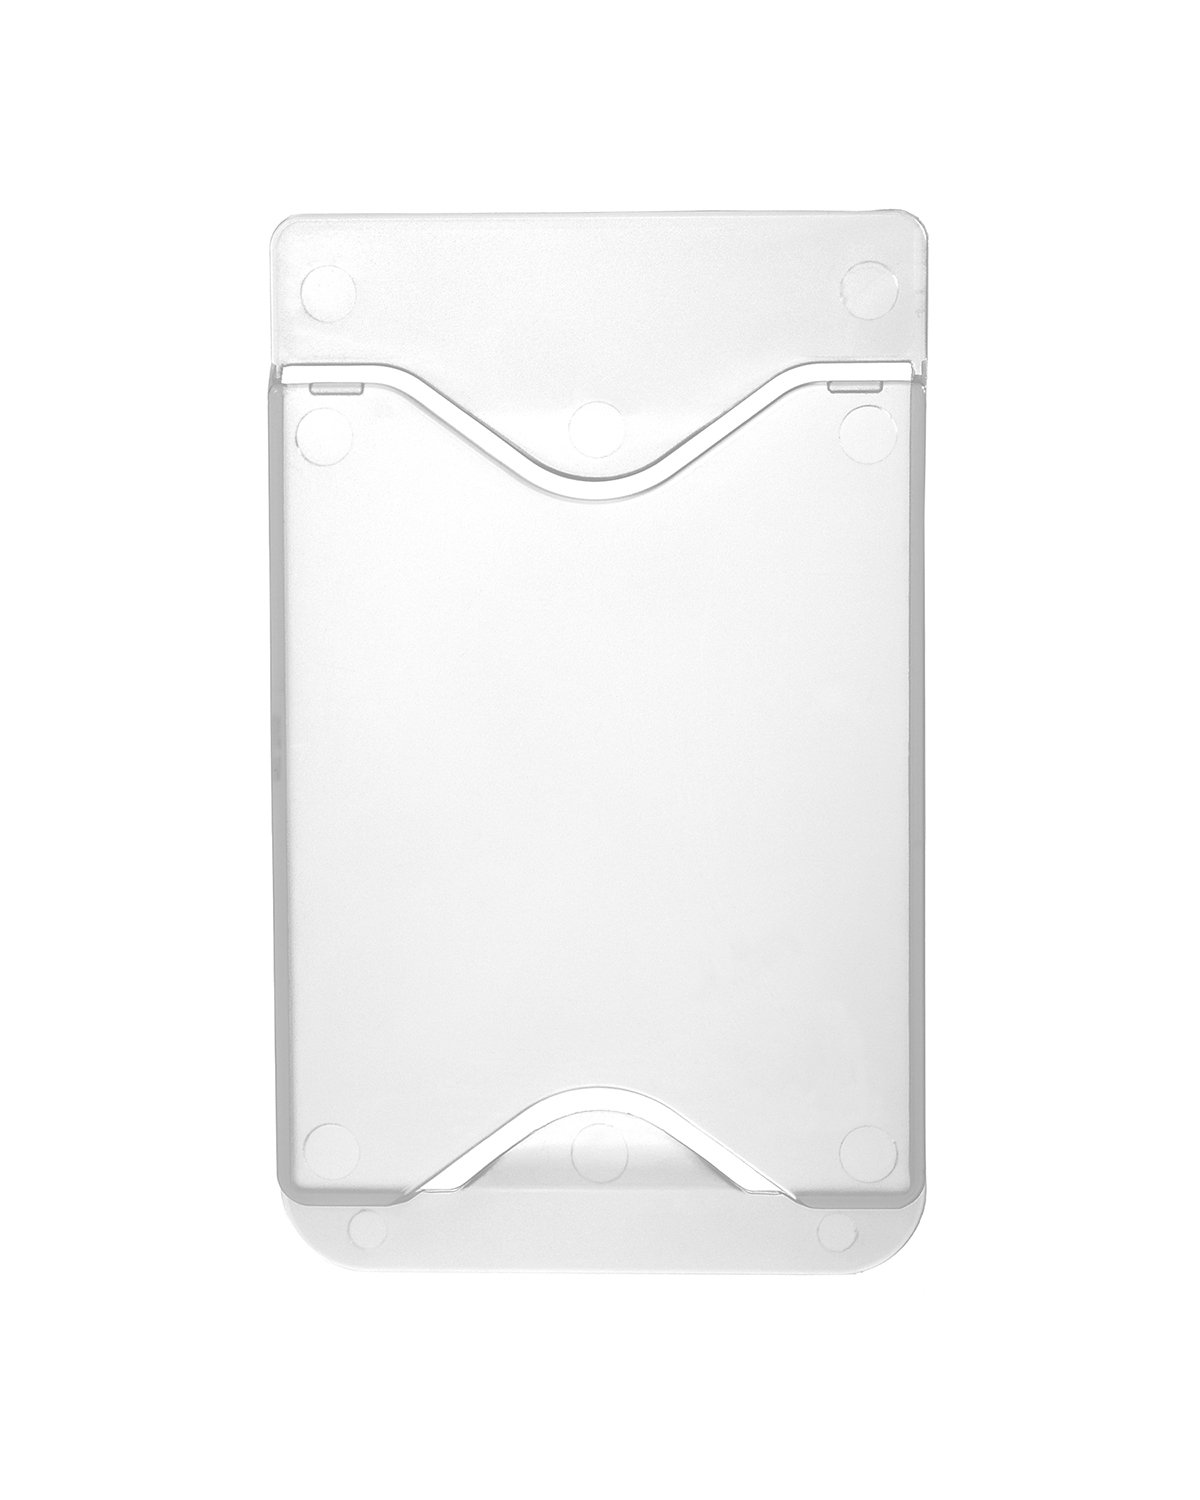 Prime Line Promo Mobile Device Card Caddy white 